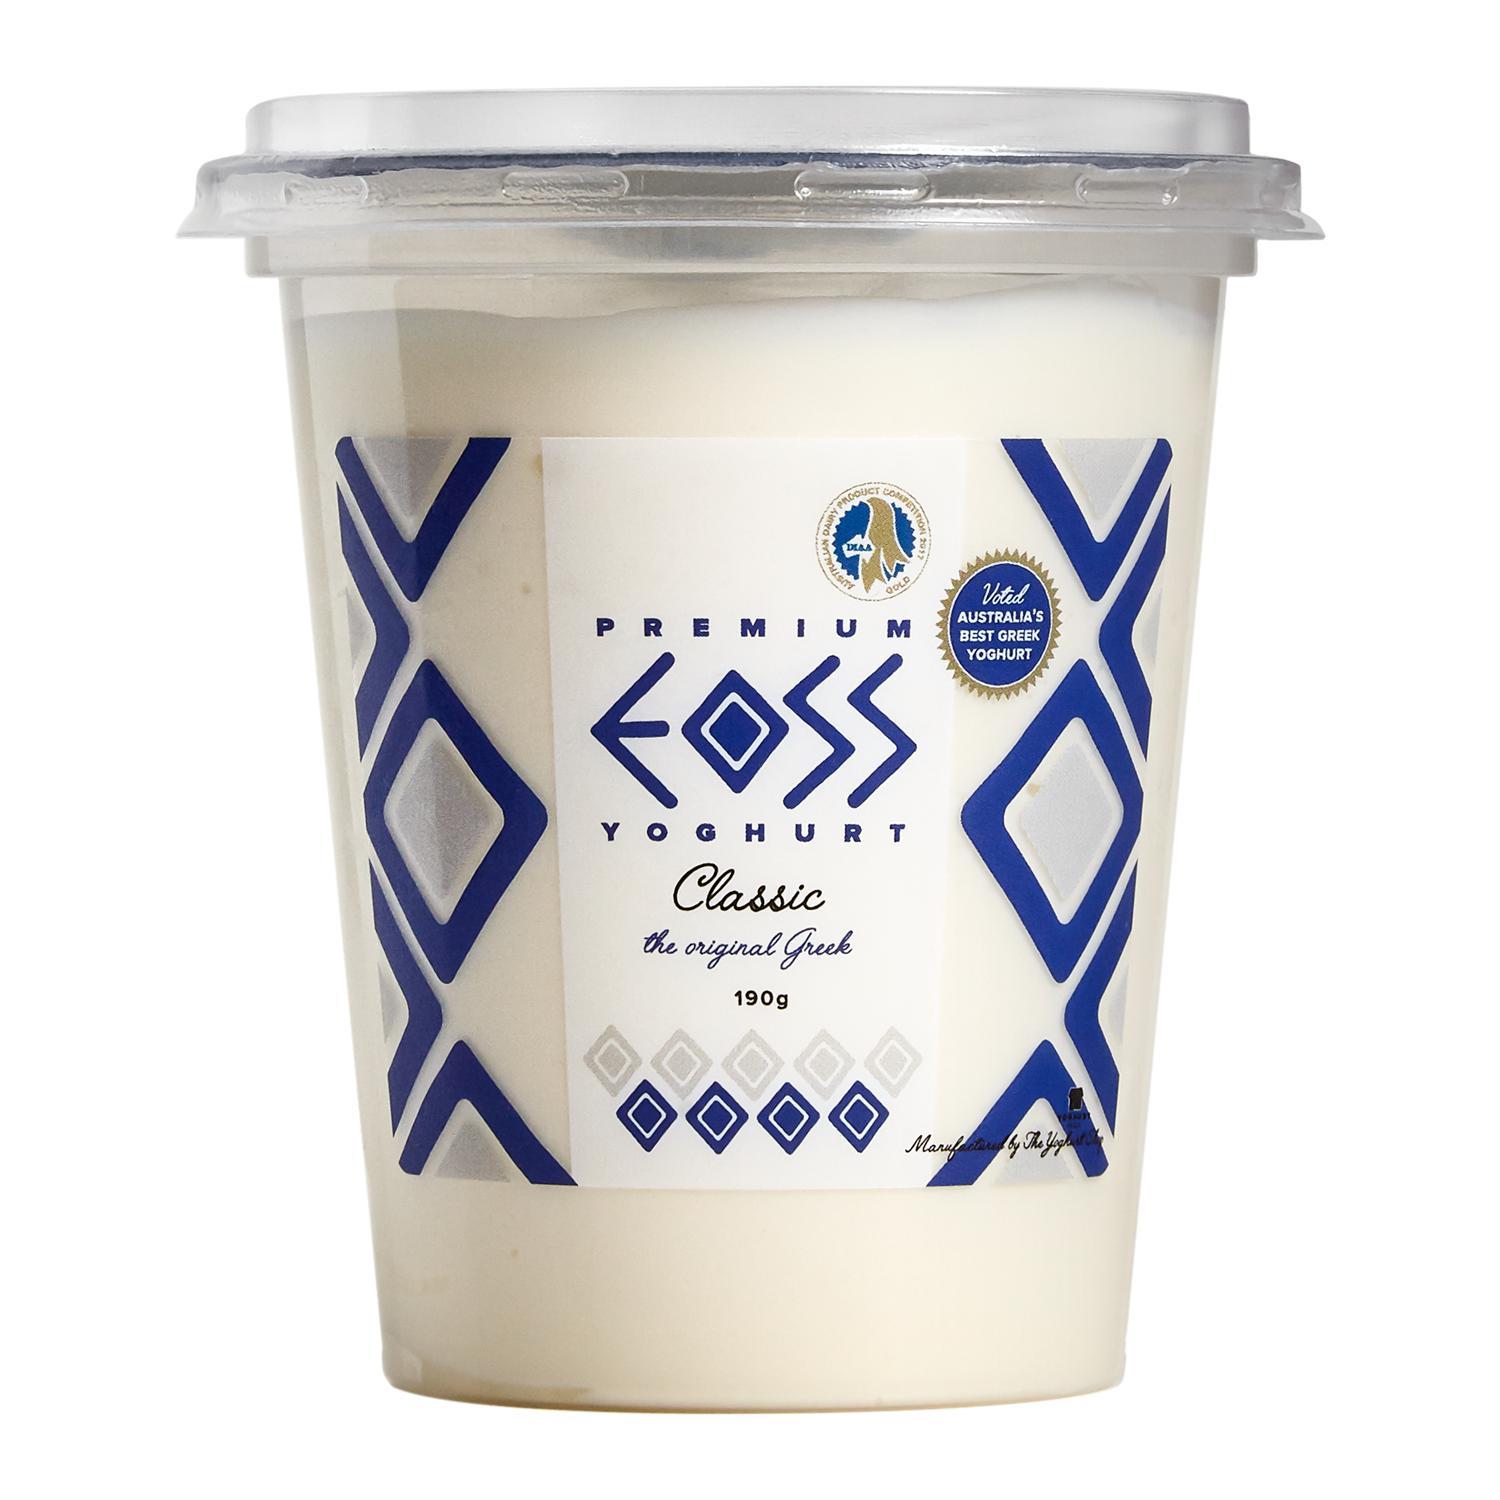 EOSS Yoghurt - Classic